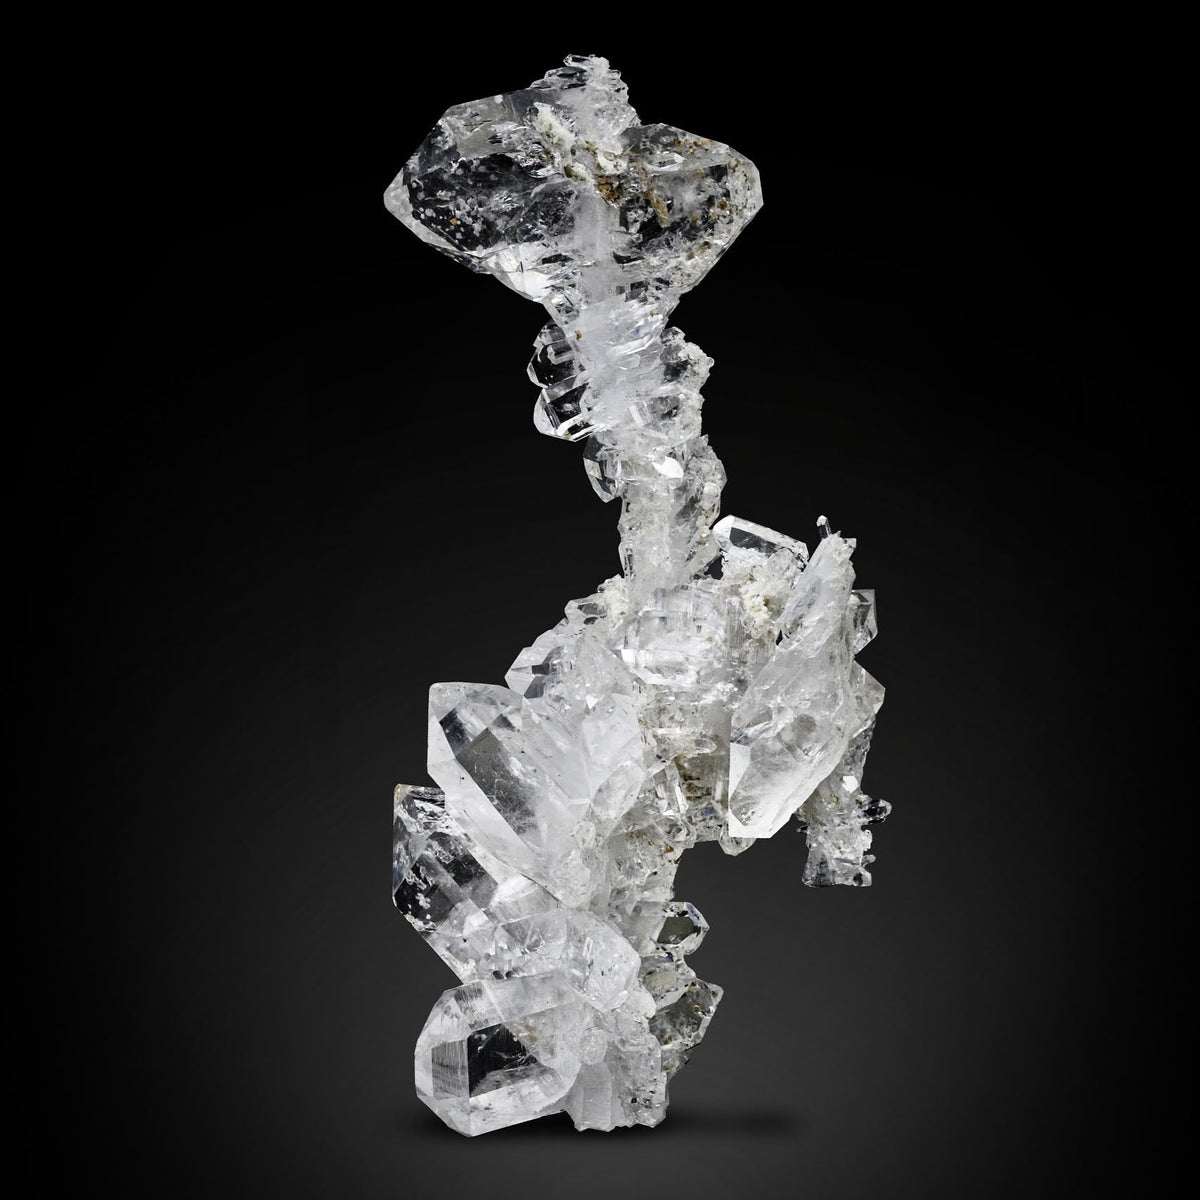 Faden Quartz Crystals with Clarity